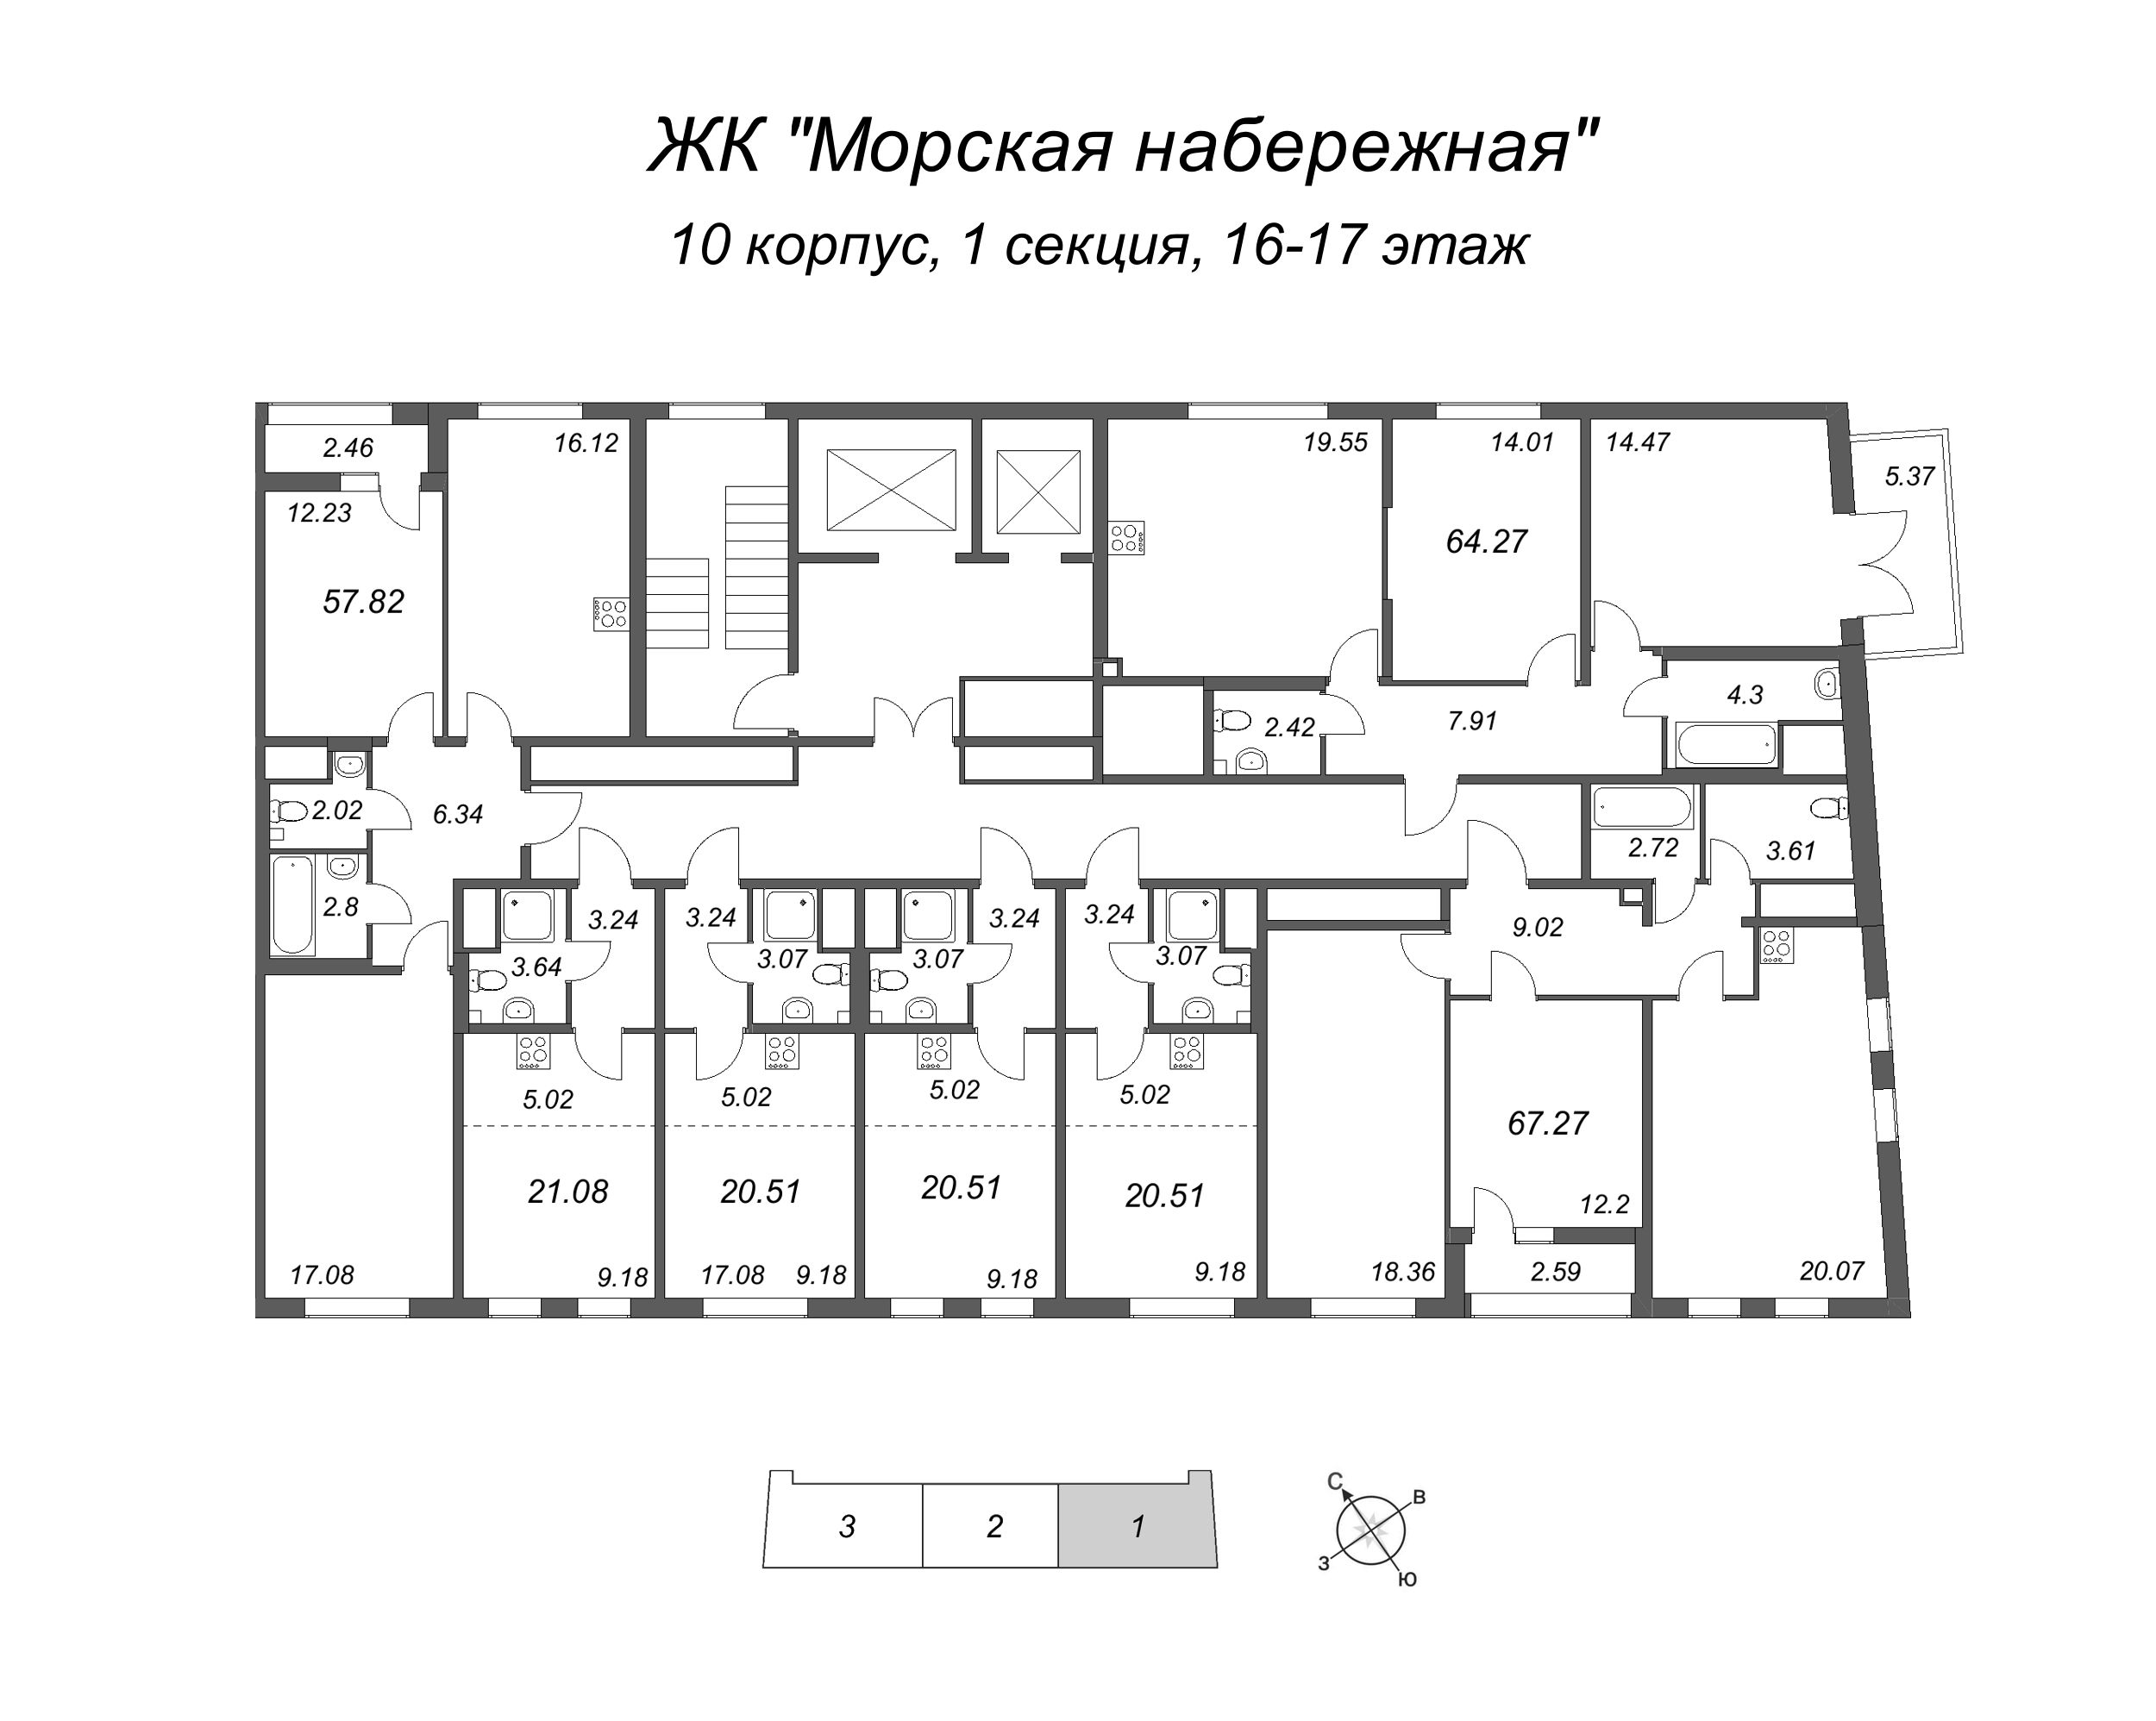 3-комнатная (Евро) квартира, 64.27 м² - планировка этажа